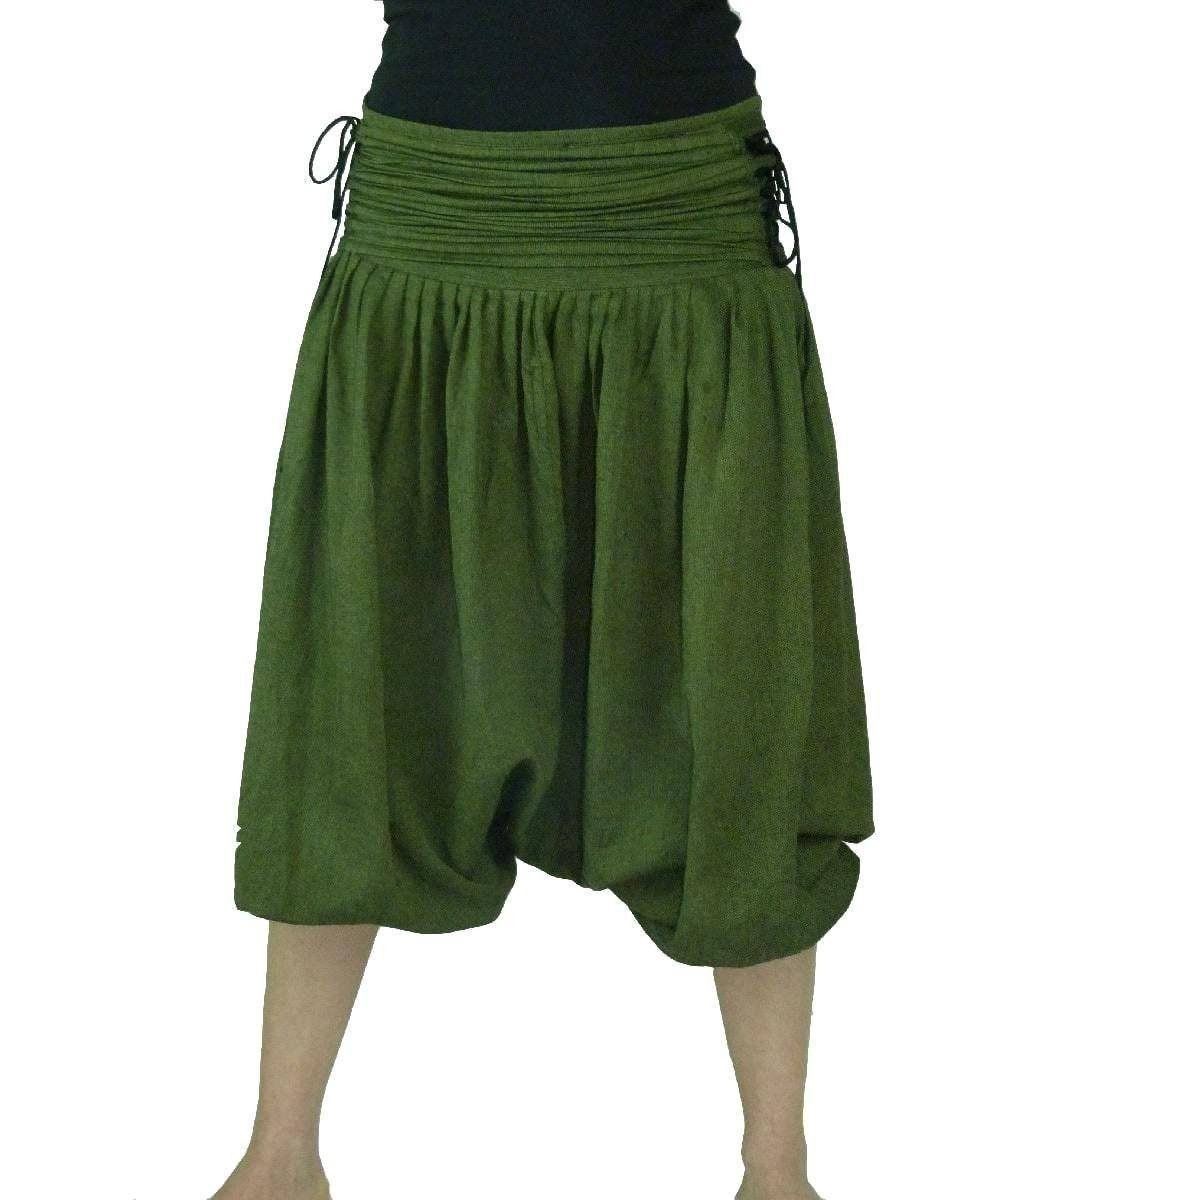 & Freizeit (1-tlg) SIMANDRA Damen - im Jaya für Aladin-Stil Grün Haremshose Sport Pluderhose